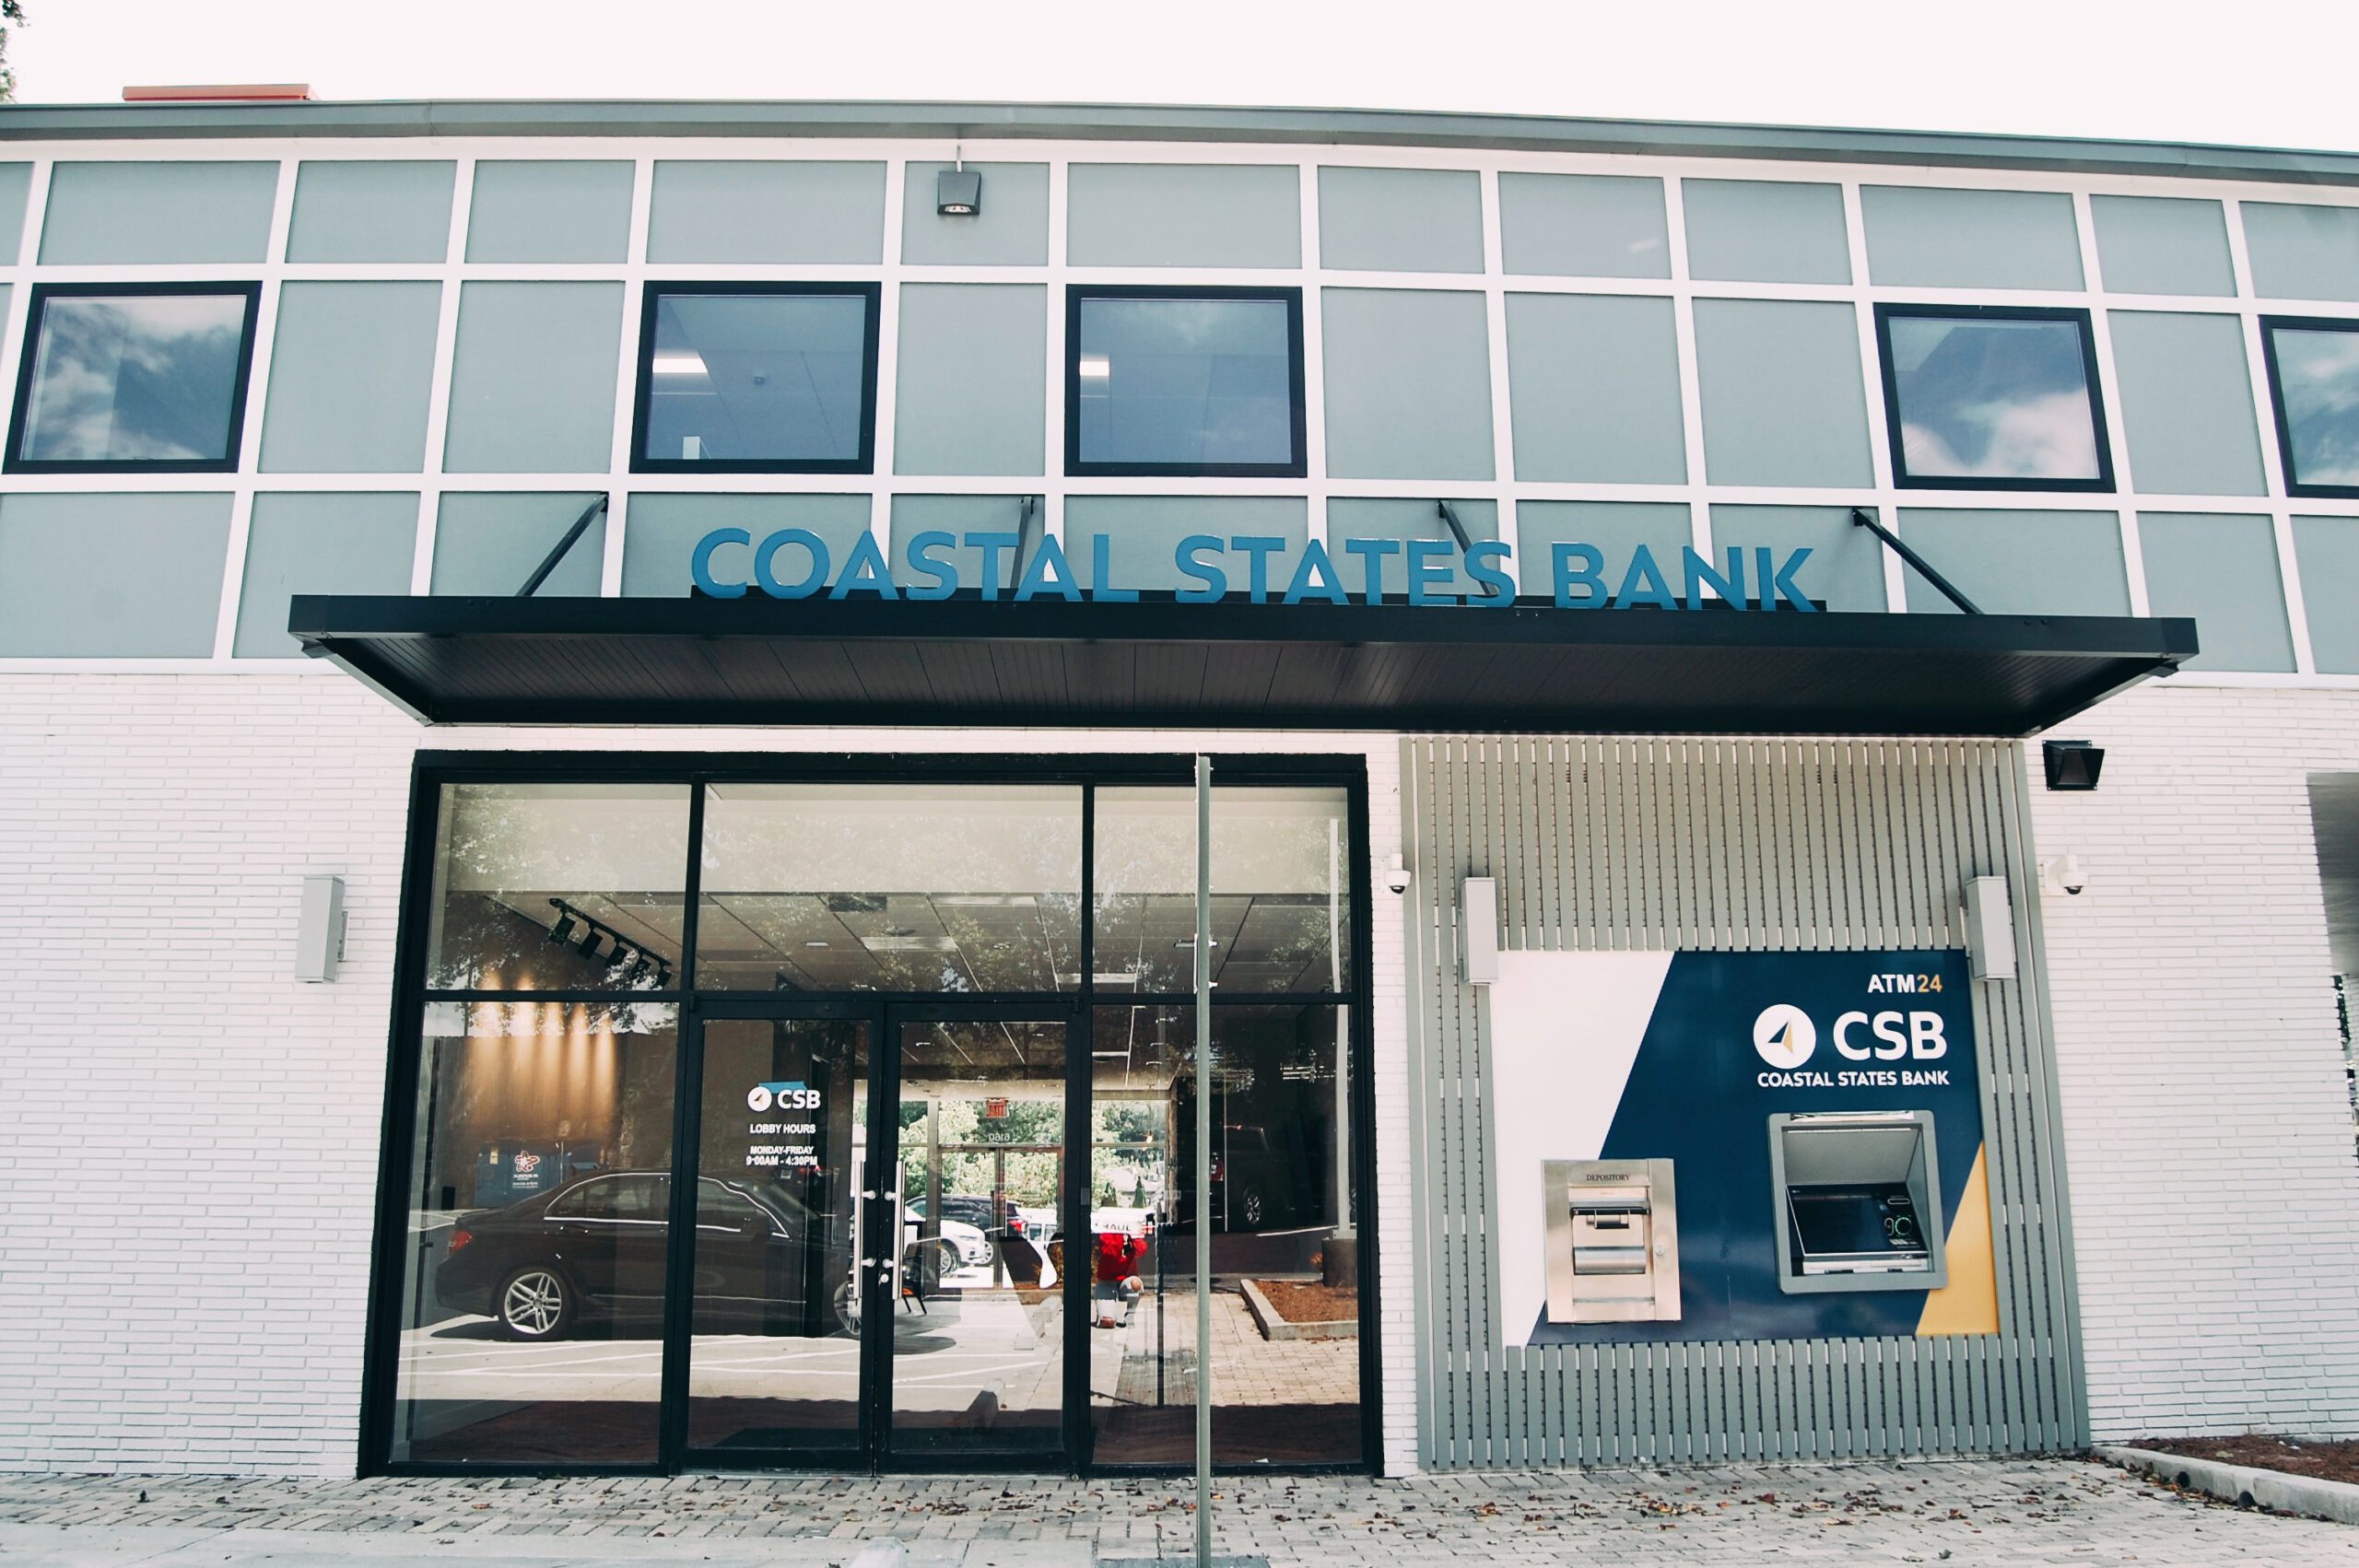 Coastal States Bank